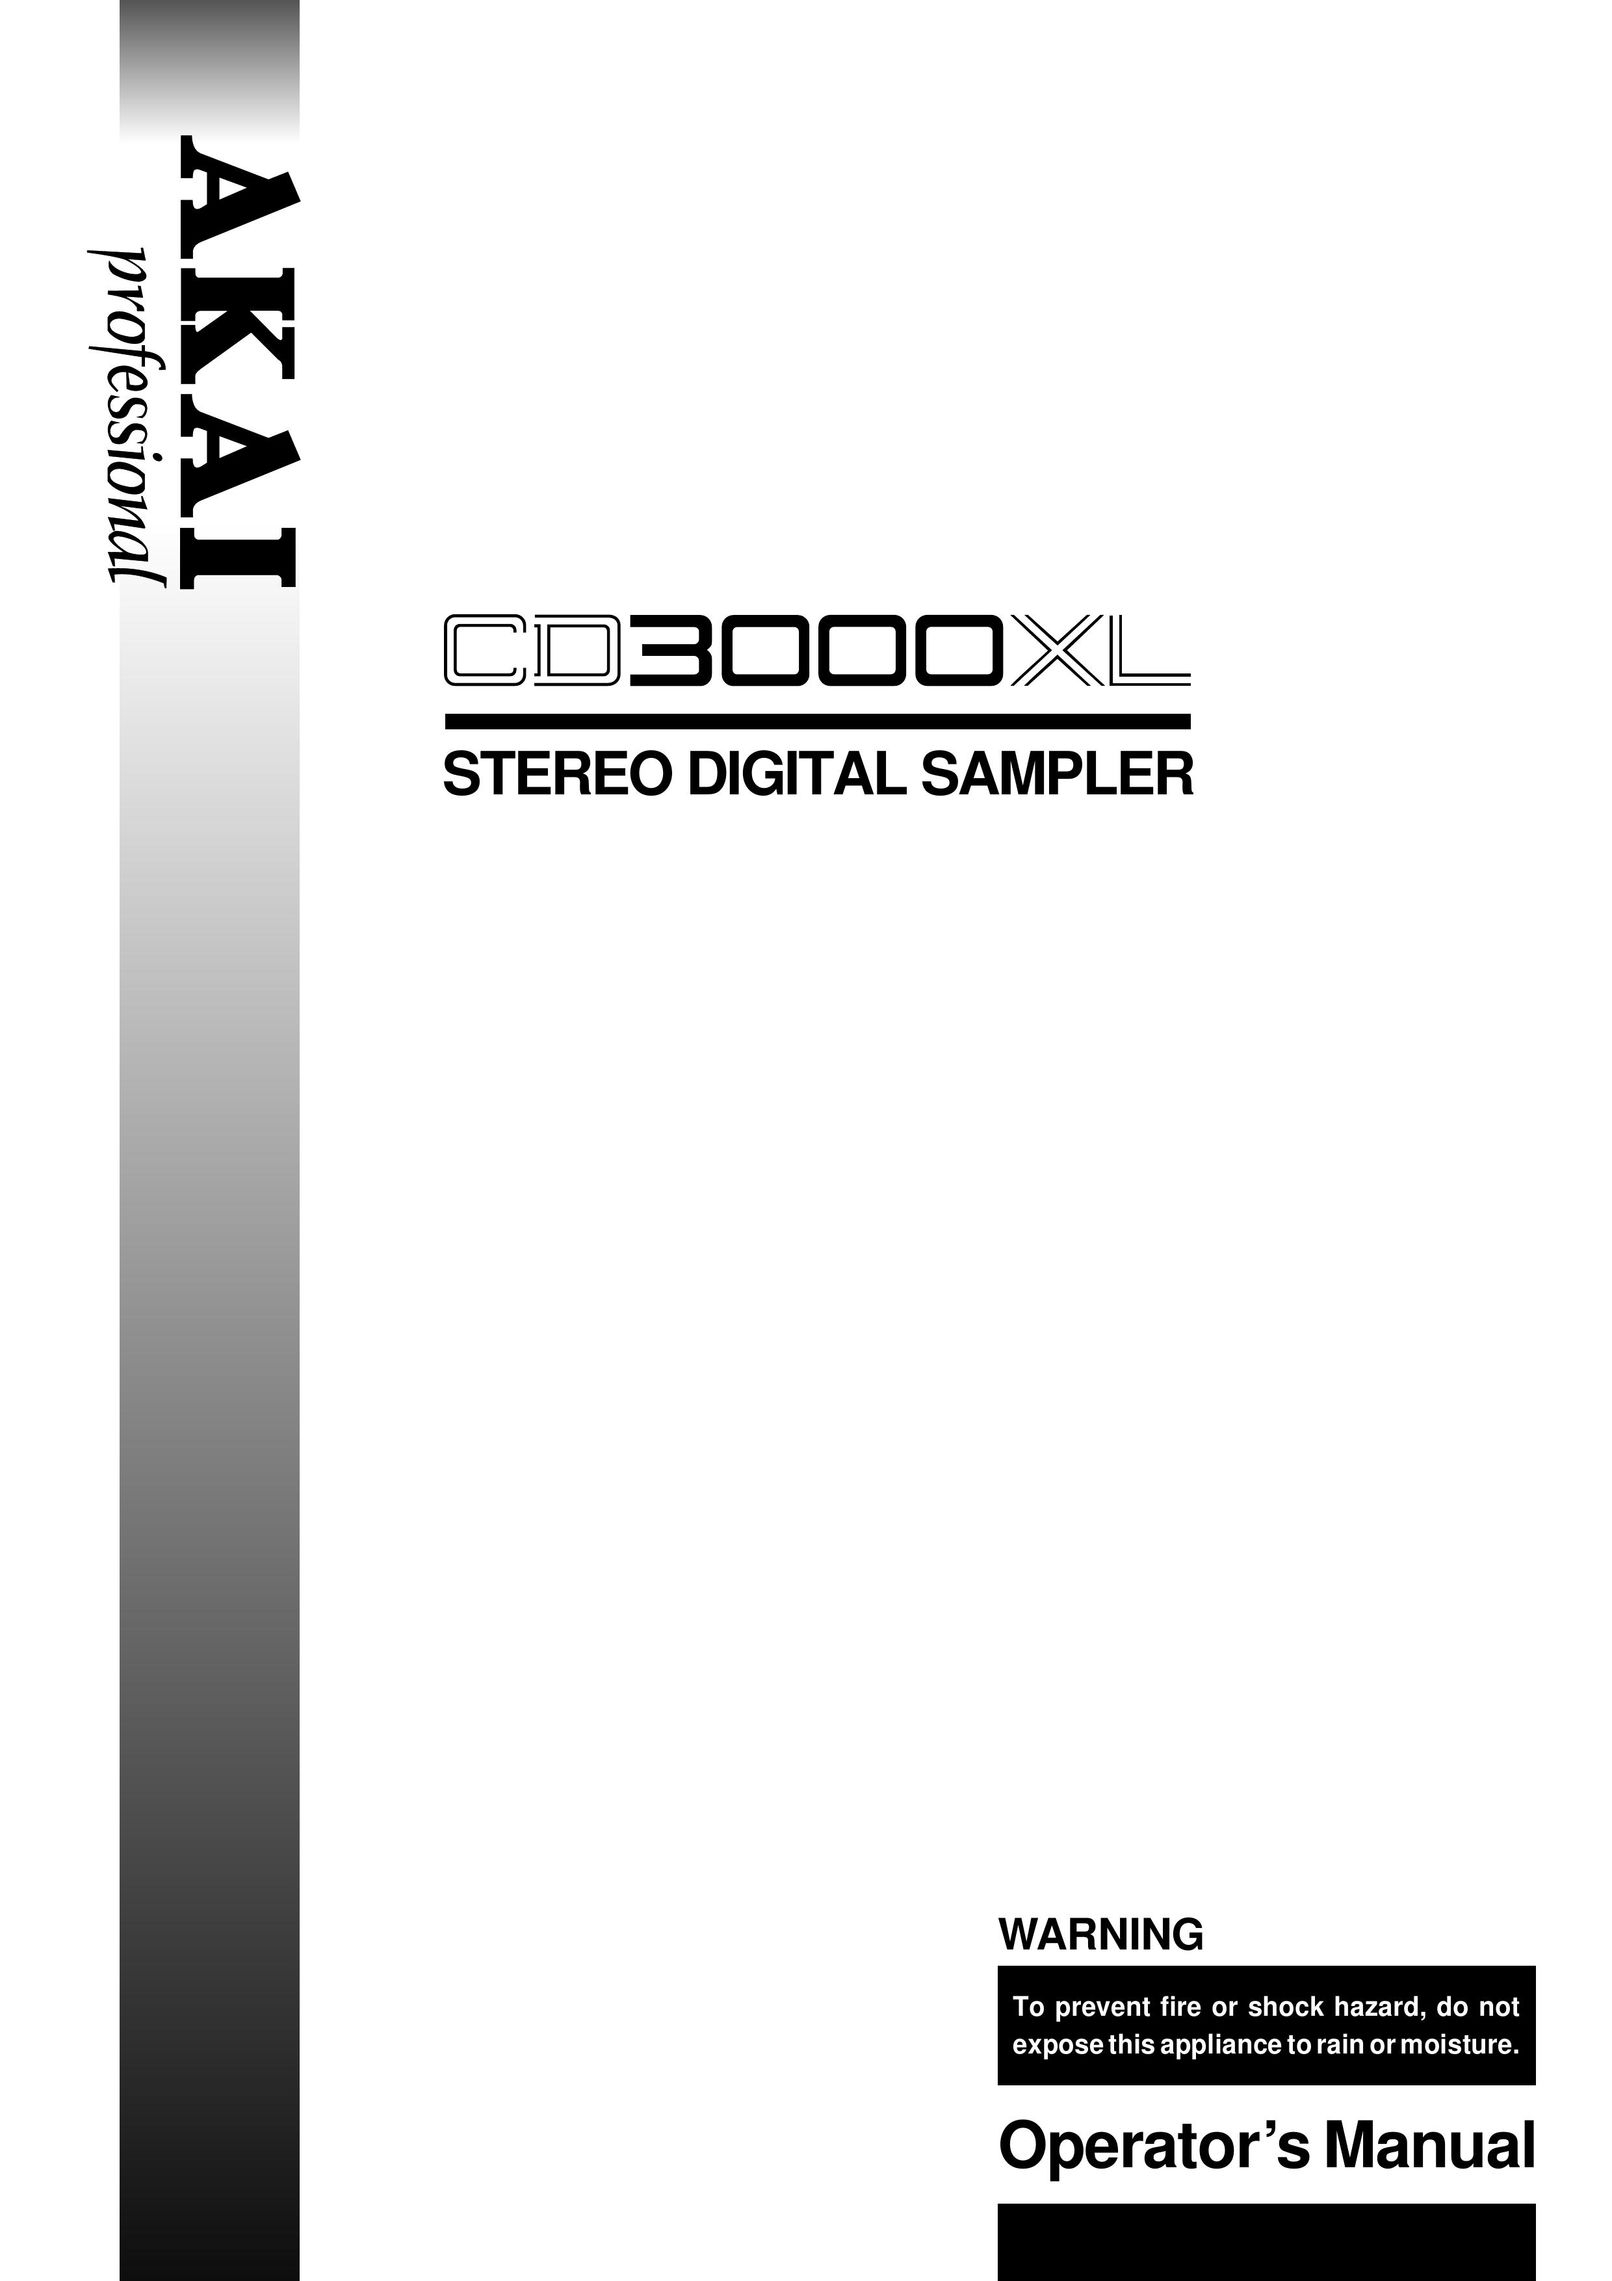 Akai CD3000XL Stereo Receiver User Manual